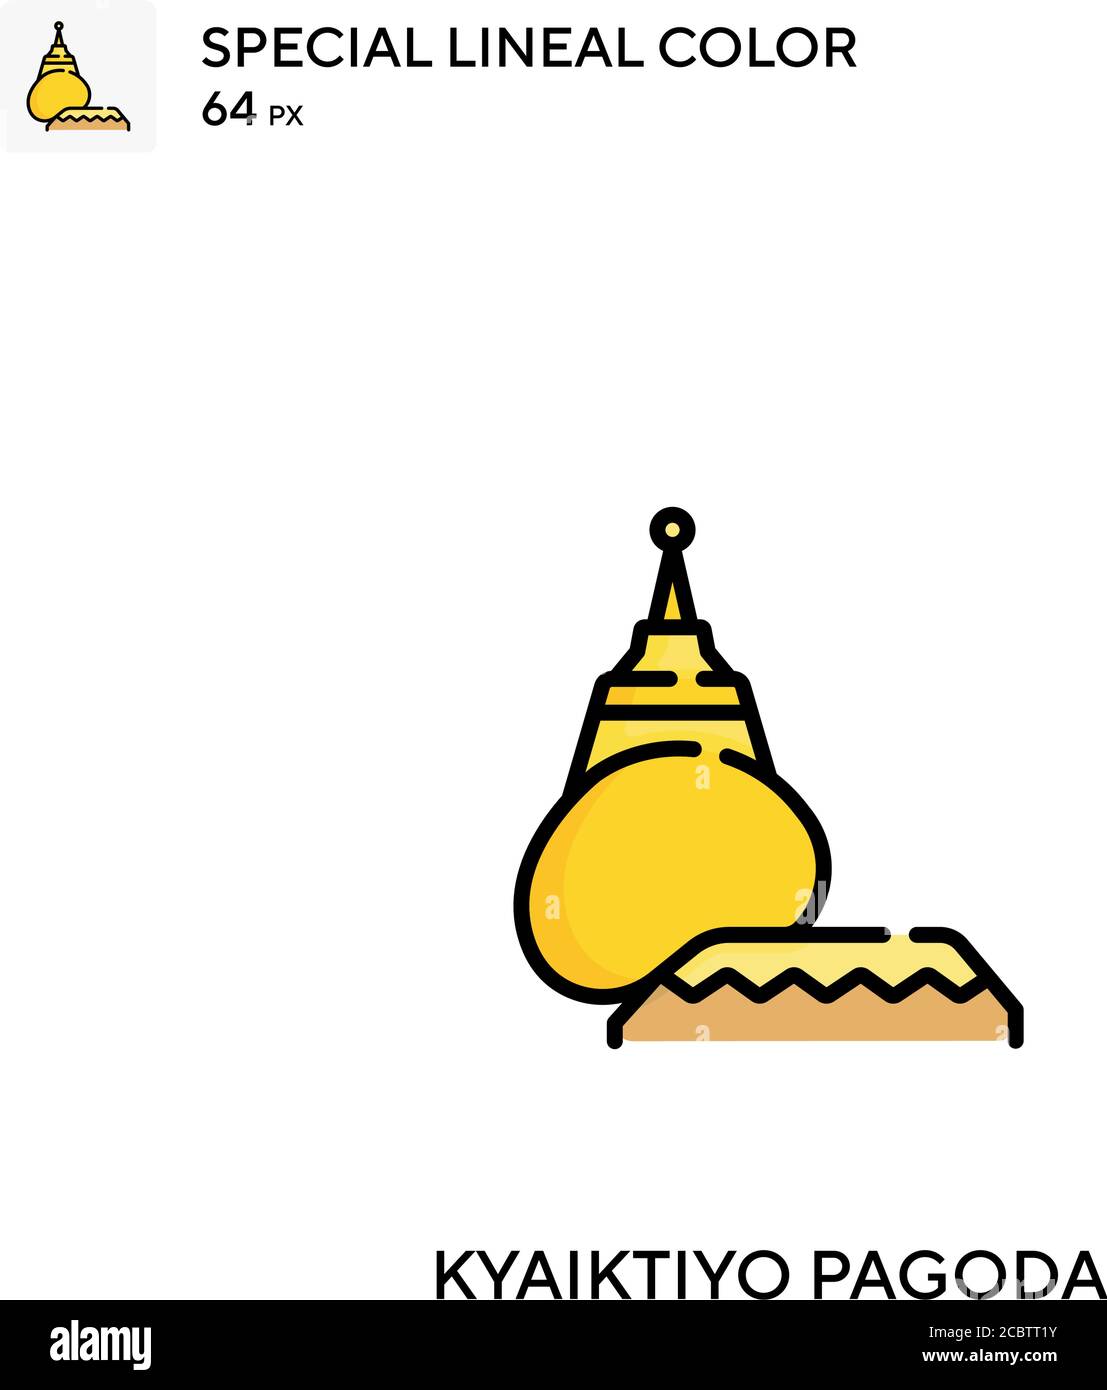 Kyaiktiyo pagoda Special lineal color vector icon. Kyaiktiyo pagoda icons for your business project Stock Vector